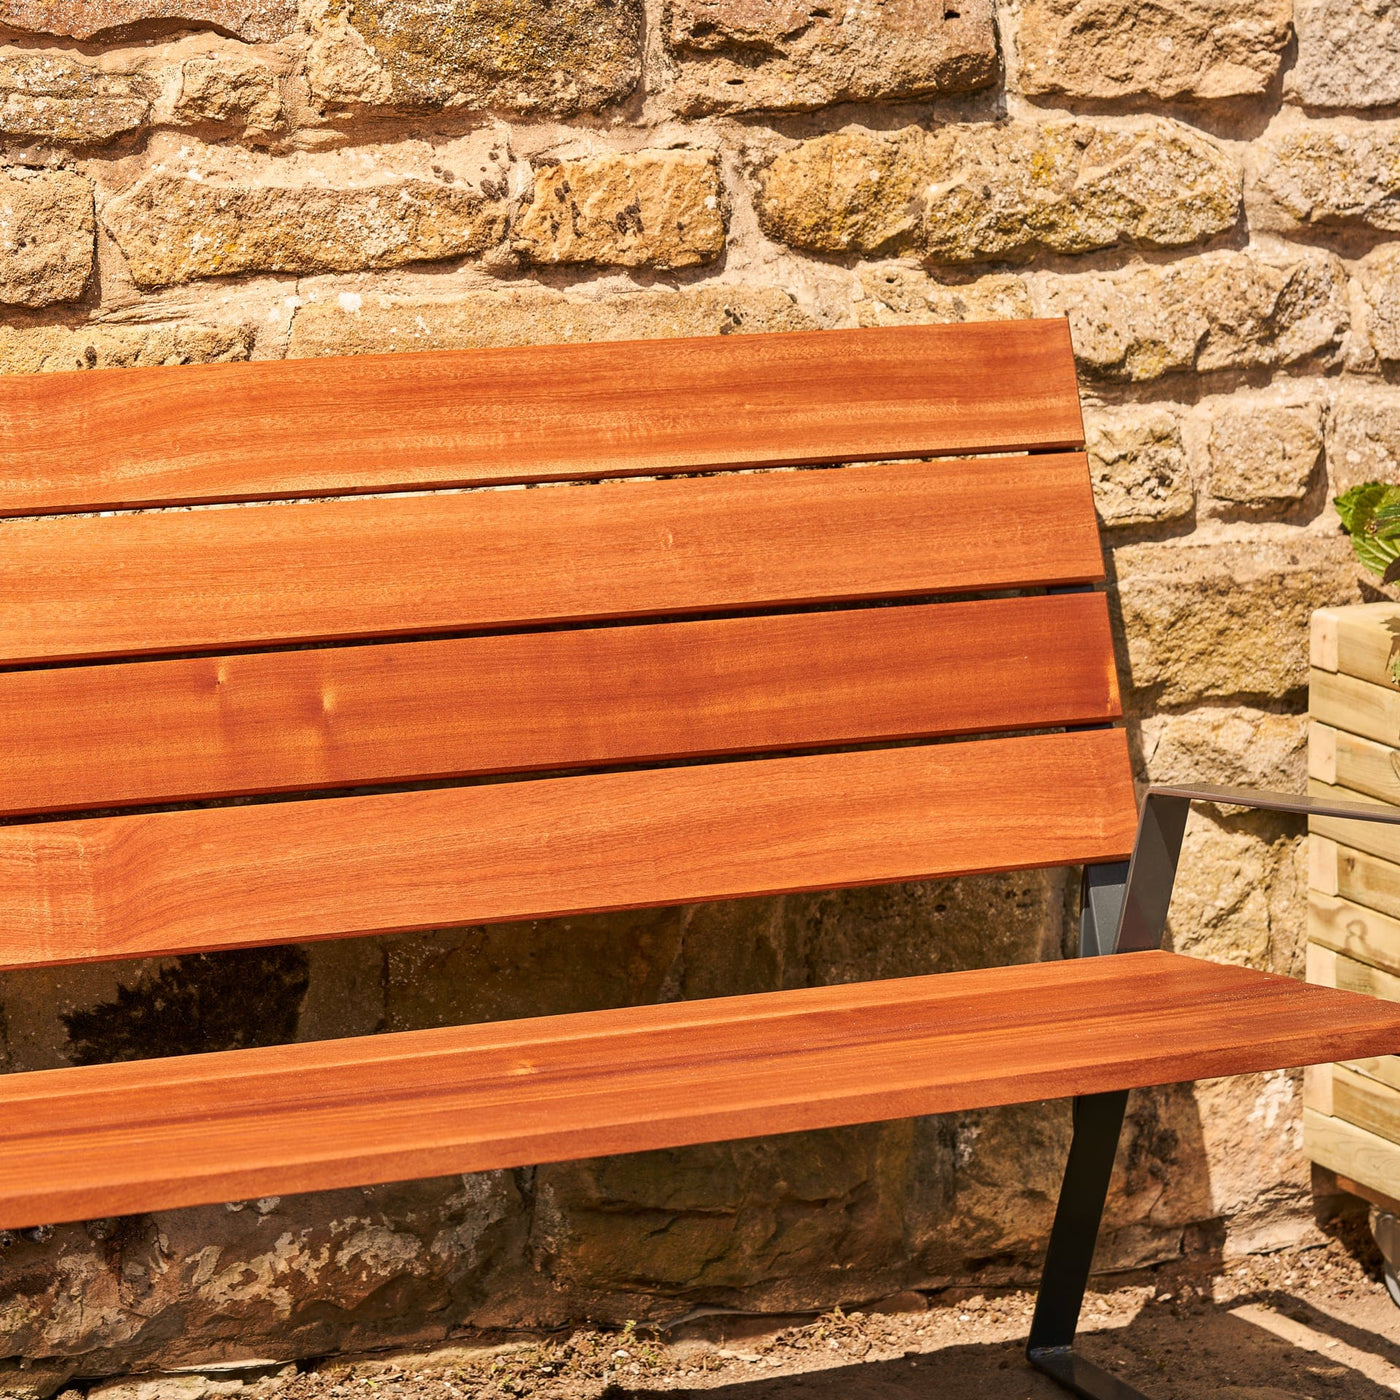 Products Handcrafted Premium Outdoor Garden Bench, Wooden Garden Furniture Outdoor Dining